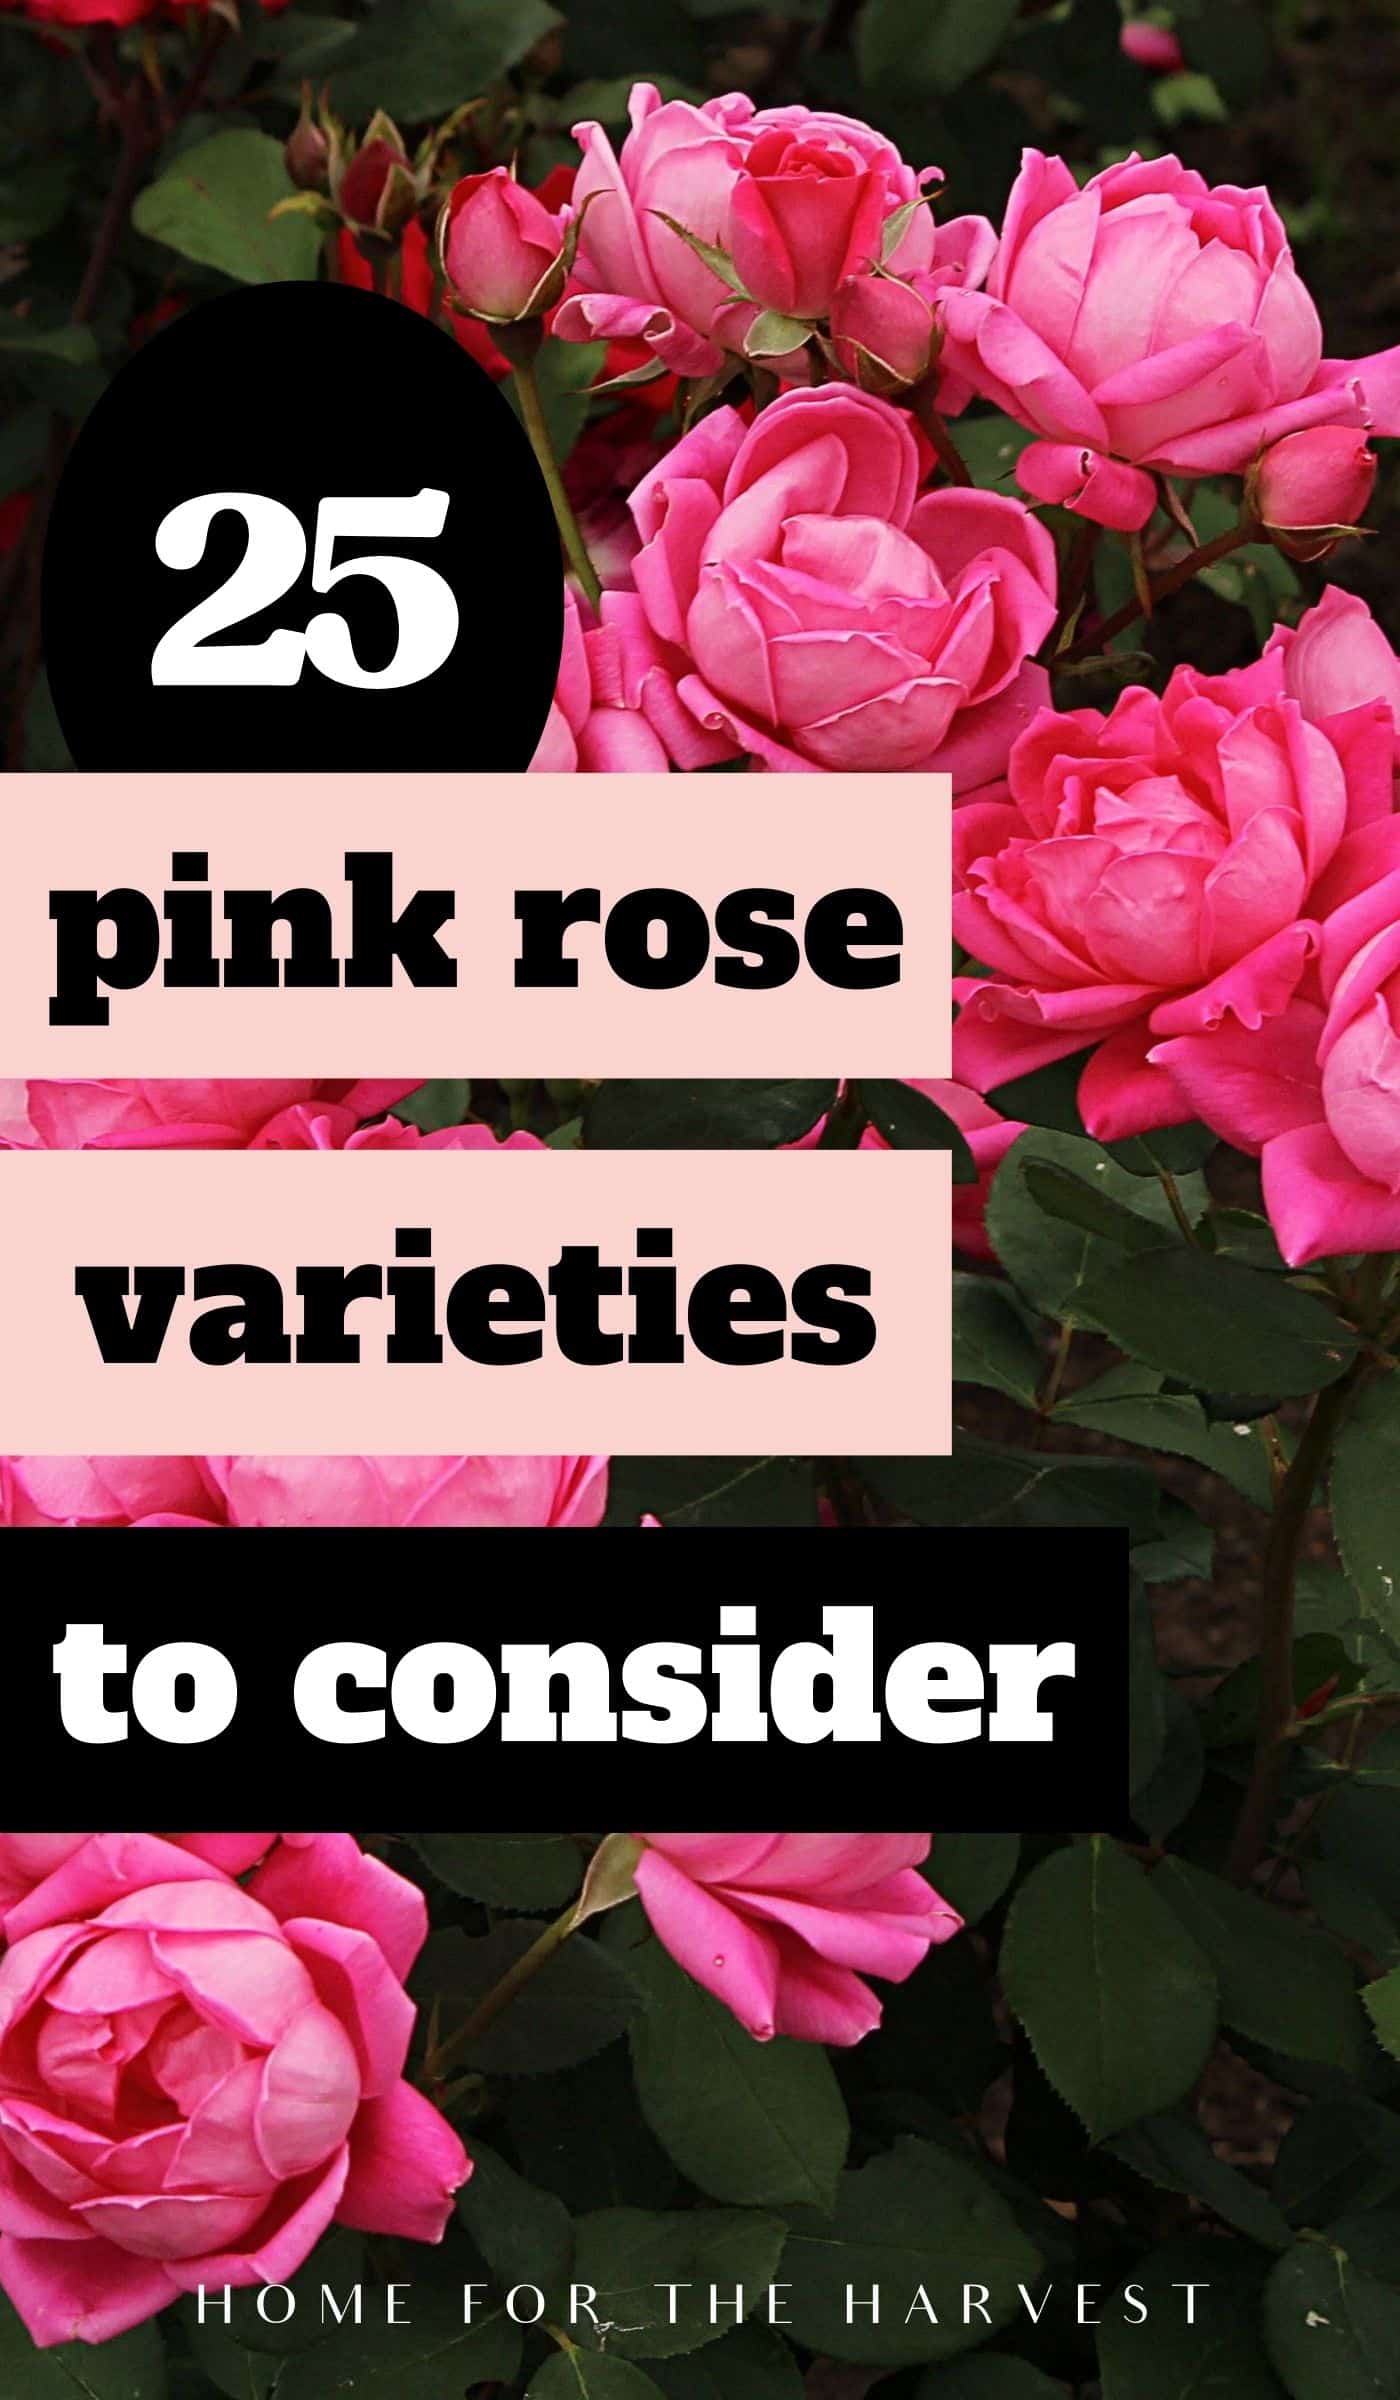 25 pink rose varieties to consider growing in your garden via @home4theharvest